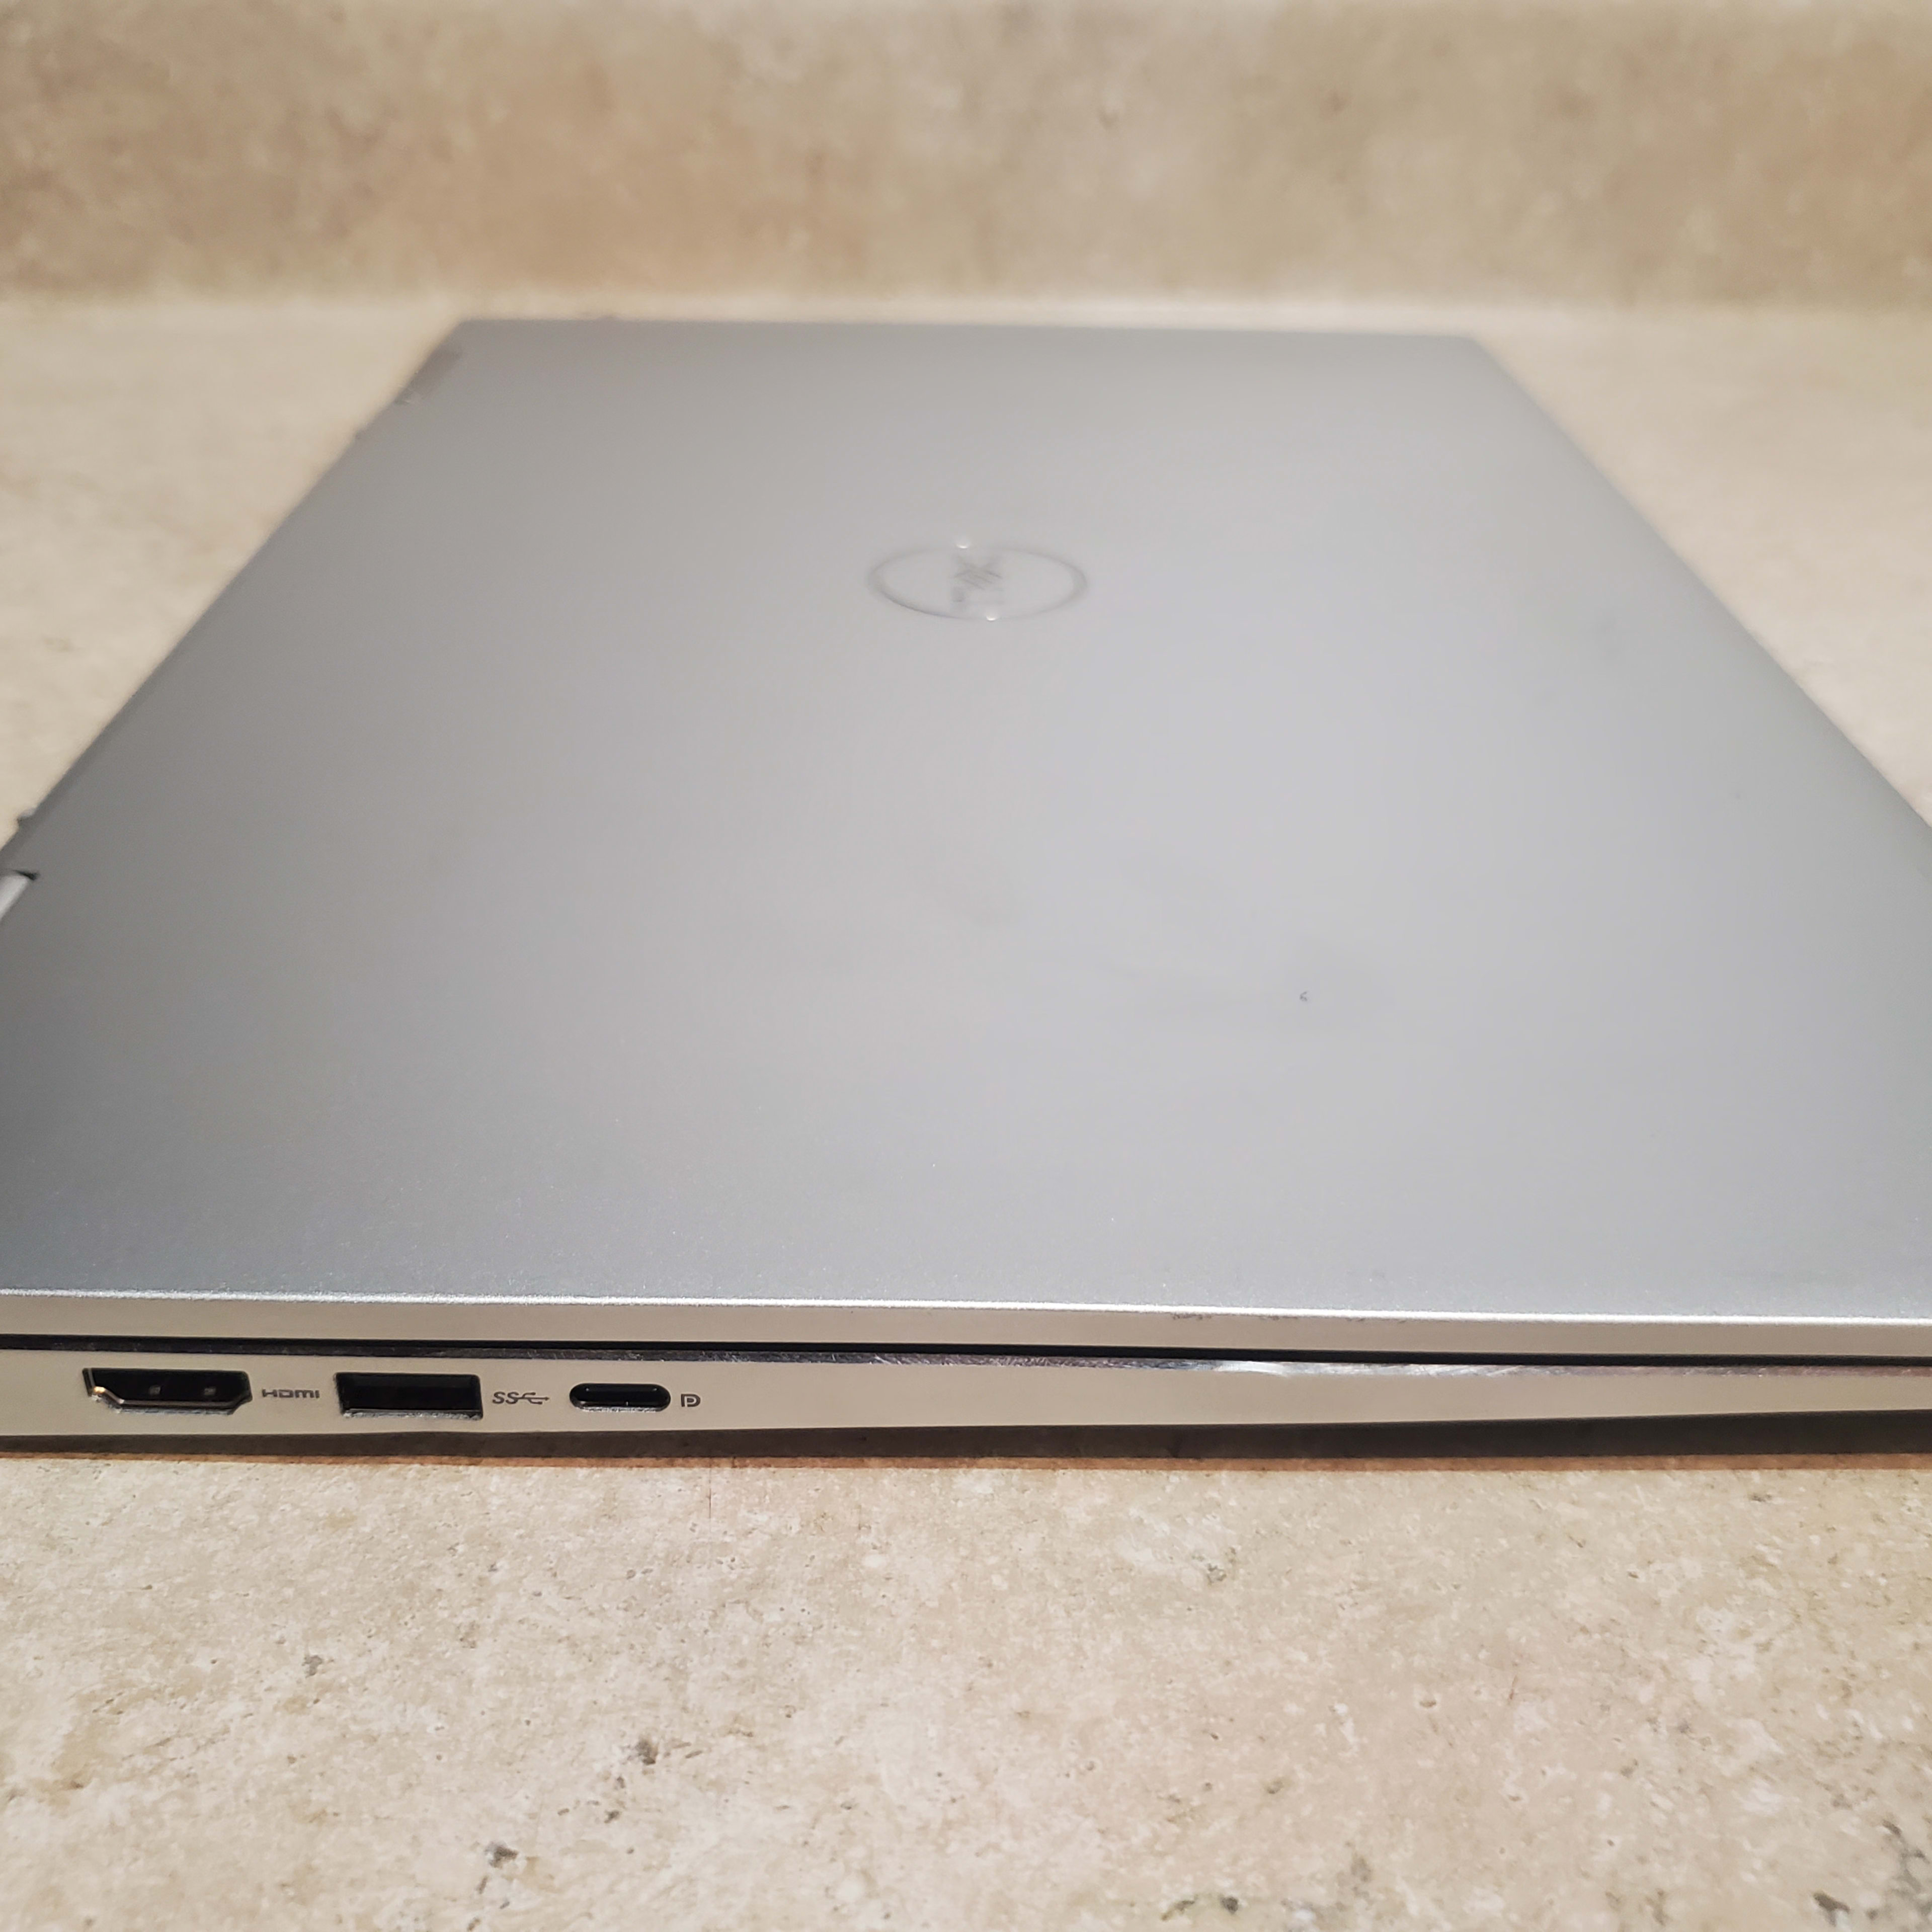 Dell Inspiron 2n1 15.6" Touchscreen Laptop